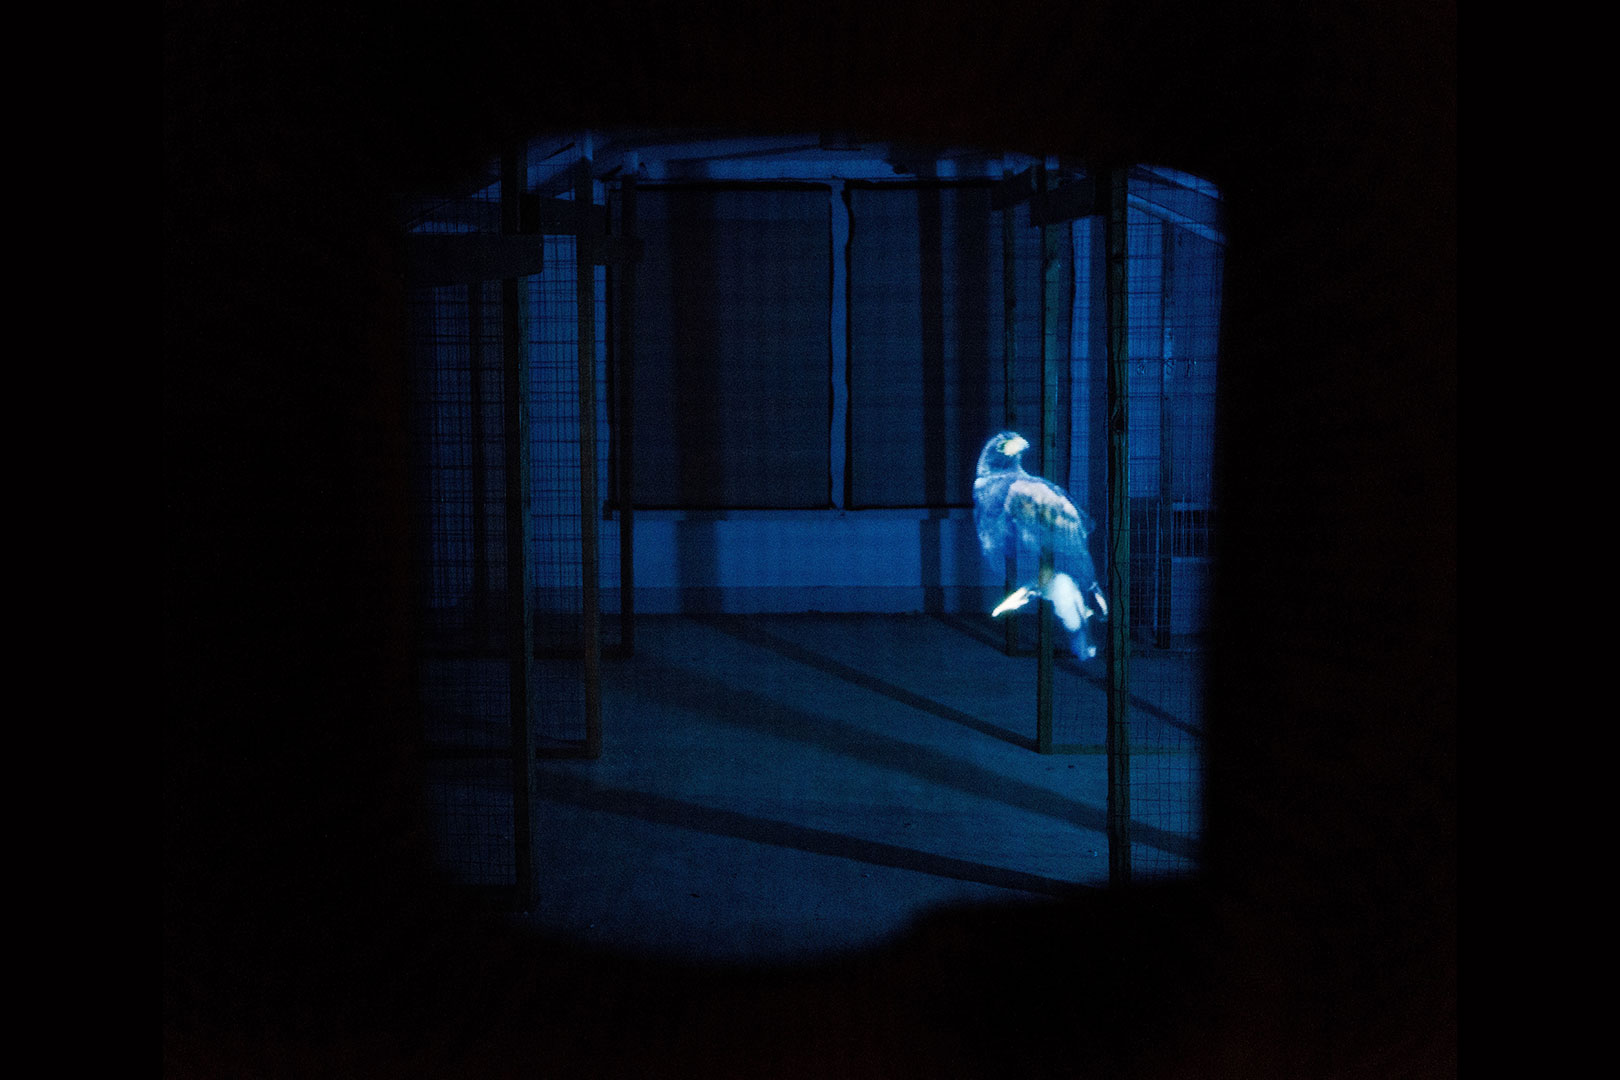 A ghostly bird floating in a dark room